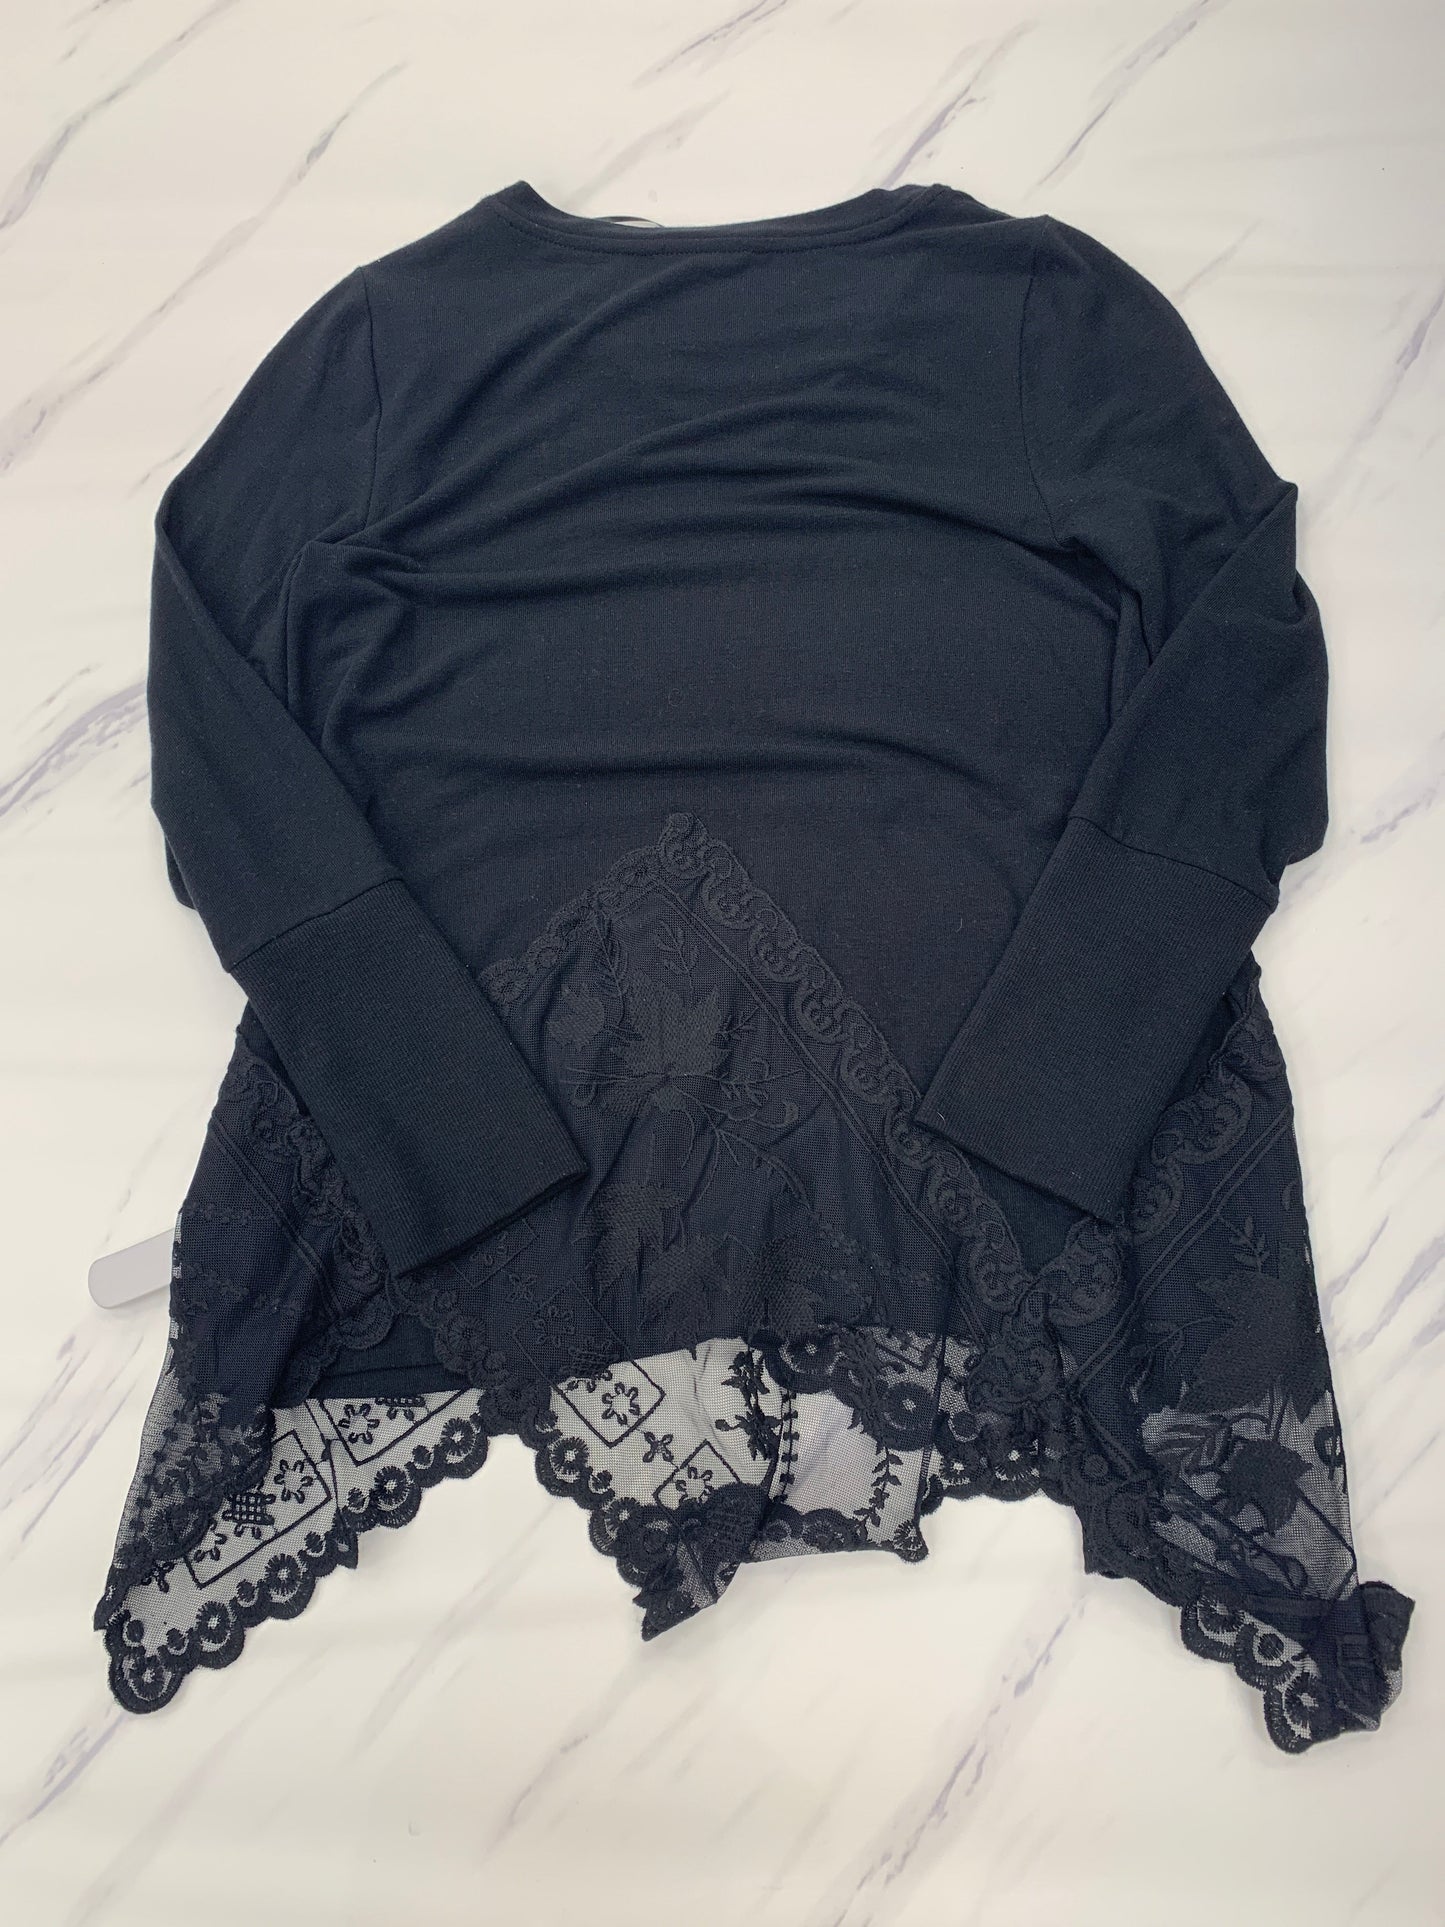 Black Top Long Sleeve Soft Surroundings, Size M